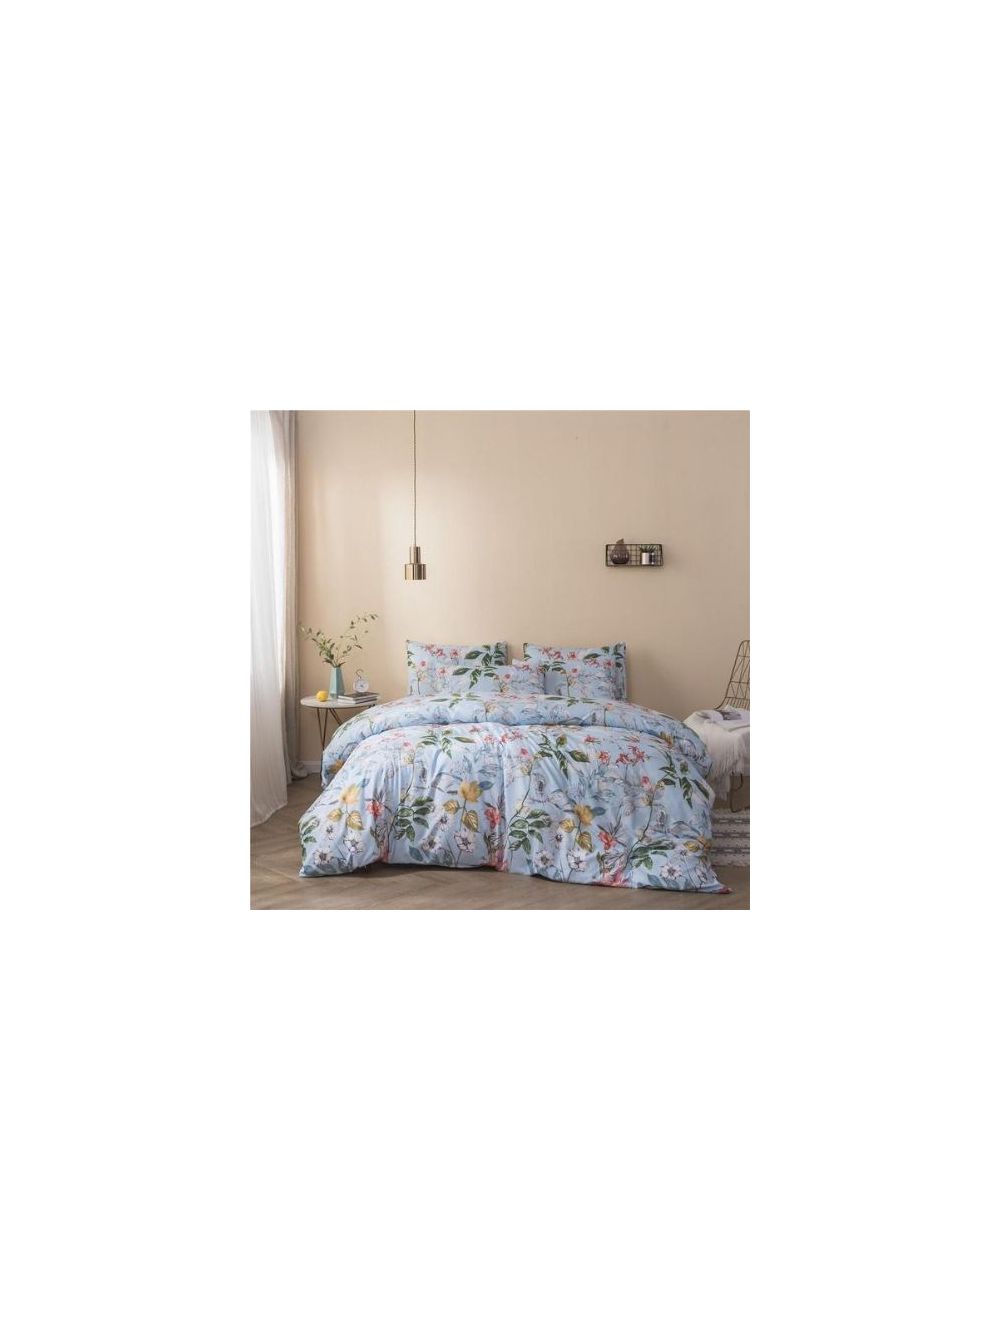 DEALS FOR LESS - Queen/double Size, Duvet Cover, Bedding Set Of 6 Pieces,  Blue Floral Design, 1 Duvet Cover + 1 Bedsheet + 4 Pillow Covers.-hzaa2-06d